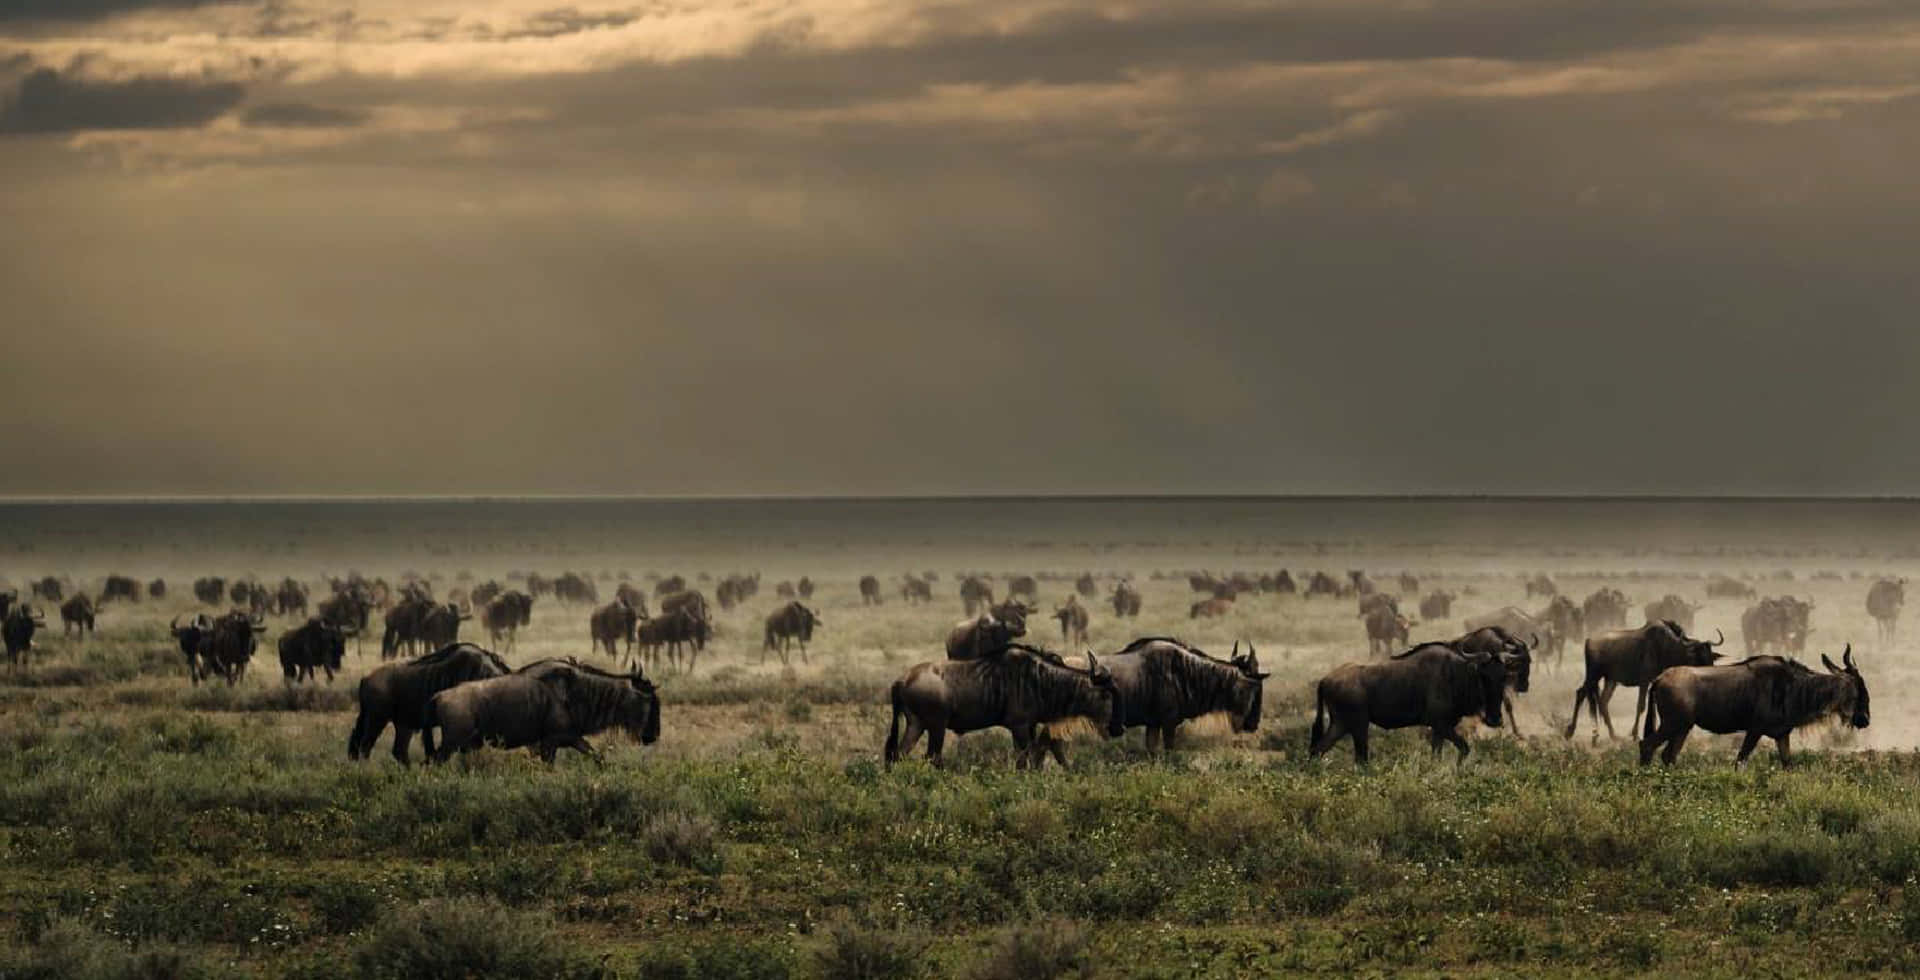 Serengeti National Park Wildebeests Migration Wallpaper